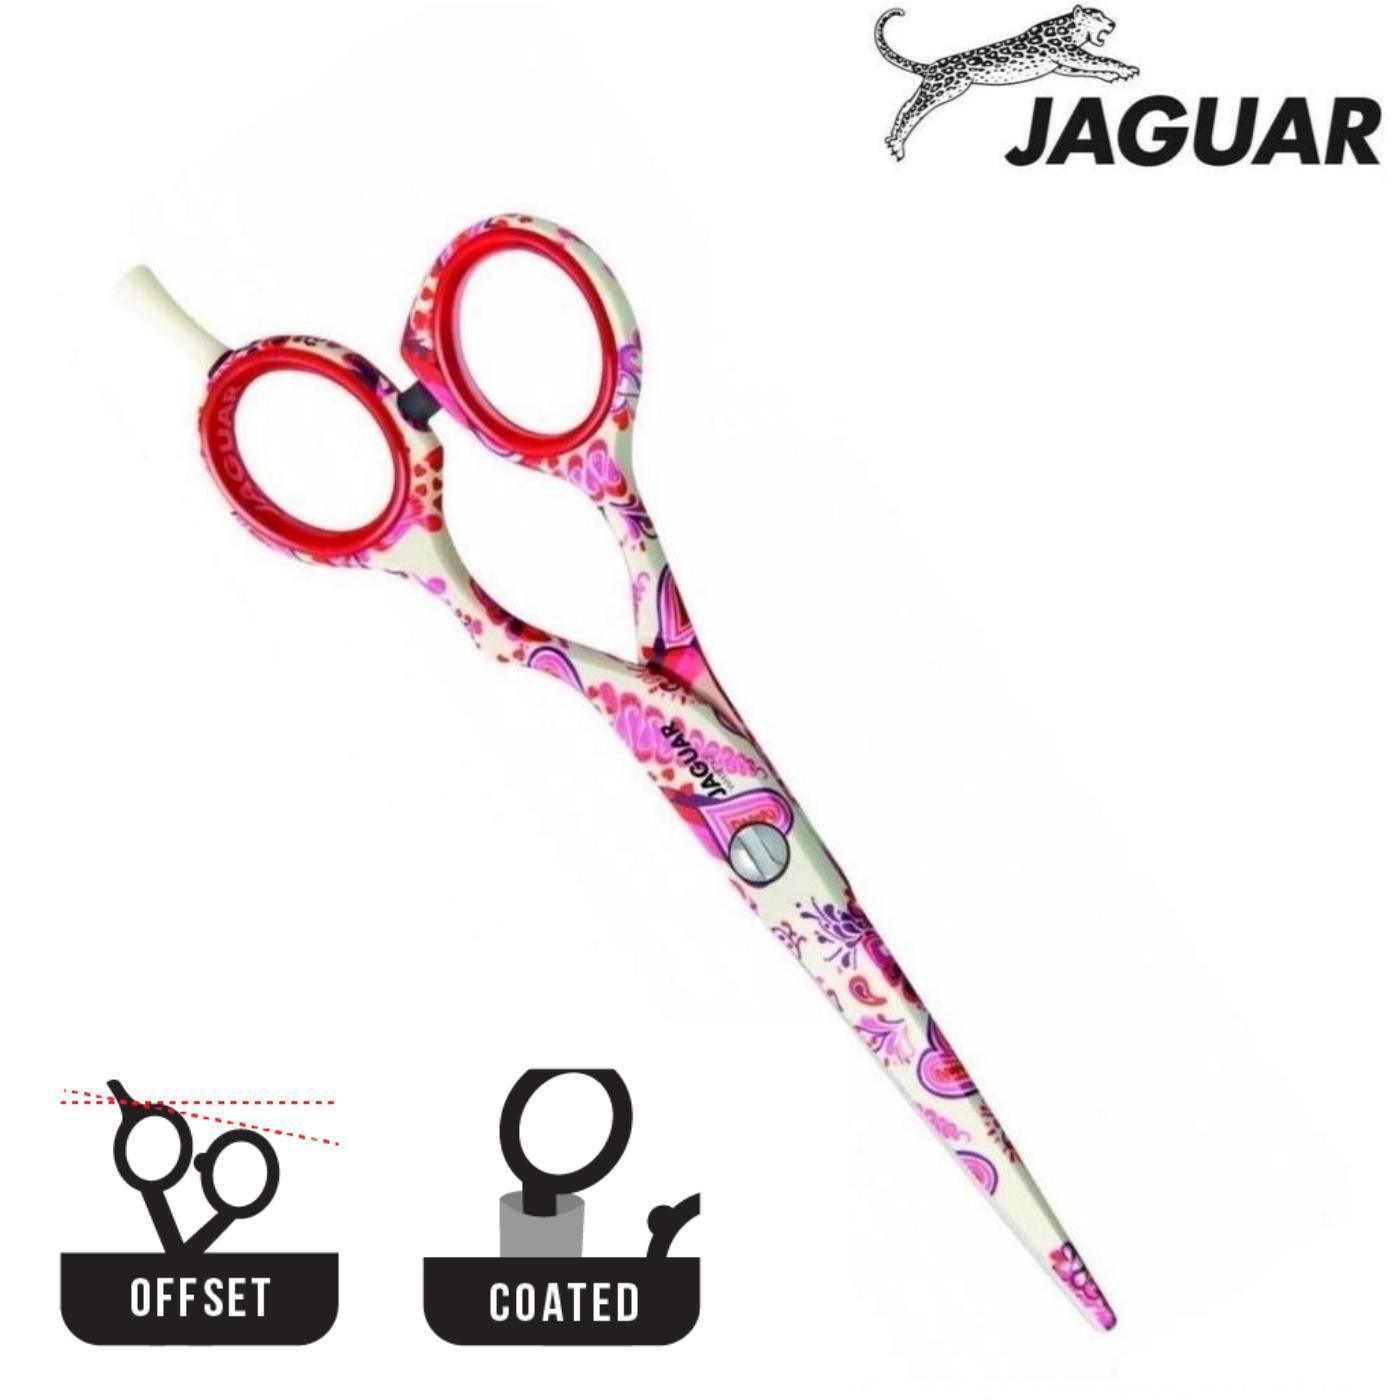 Jaguar Art HEARTBREAKER Scissors - Japan Scissors